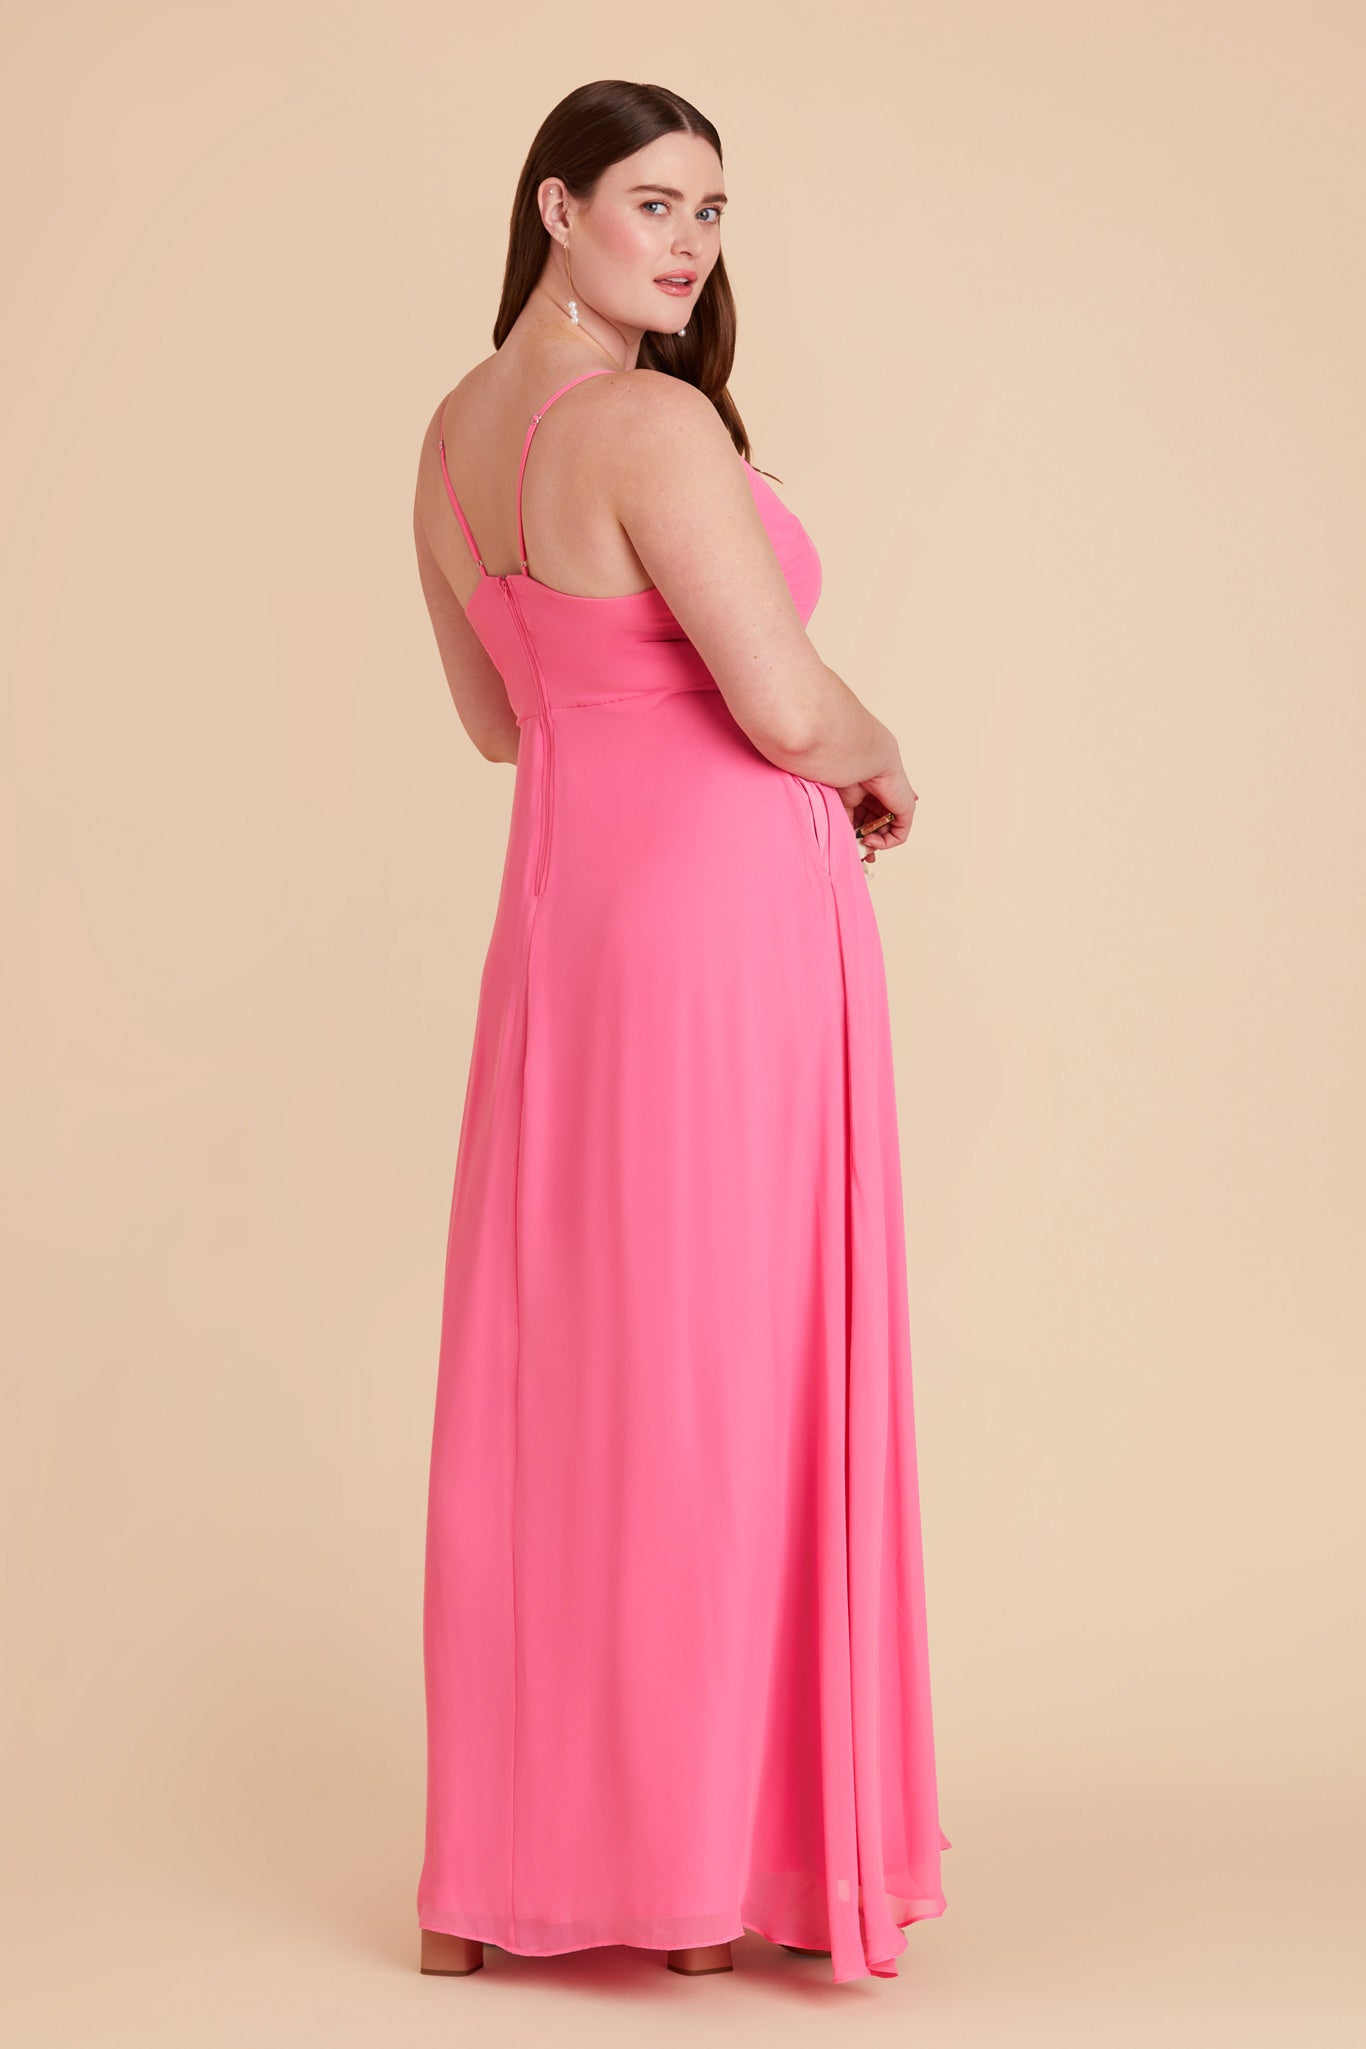 Bon Bon Pink Theresa Chiffon Dress by Birdy Grey